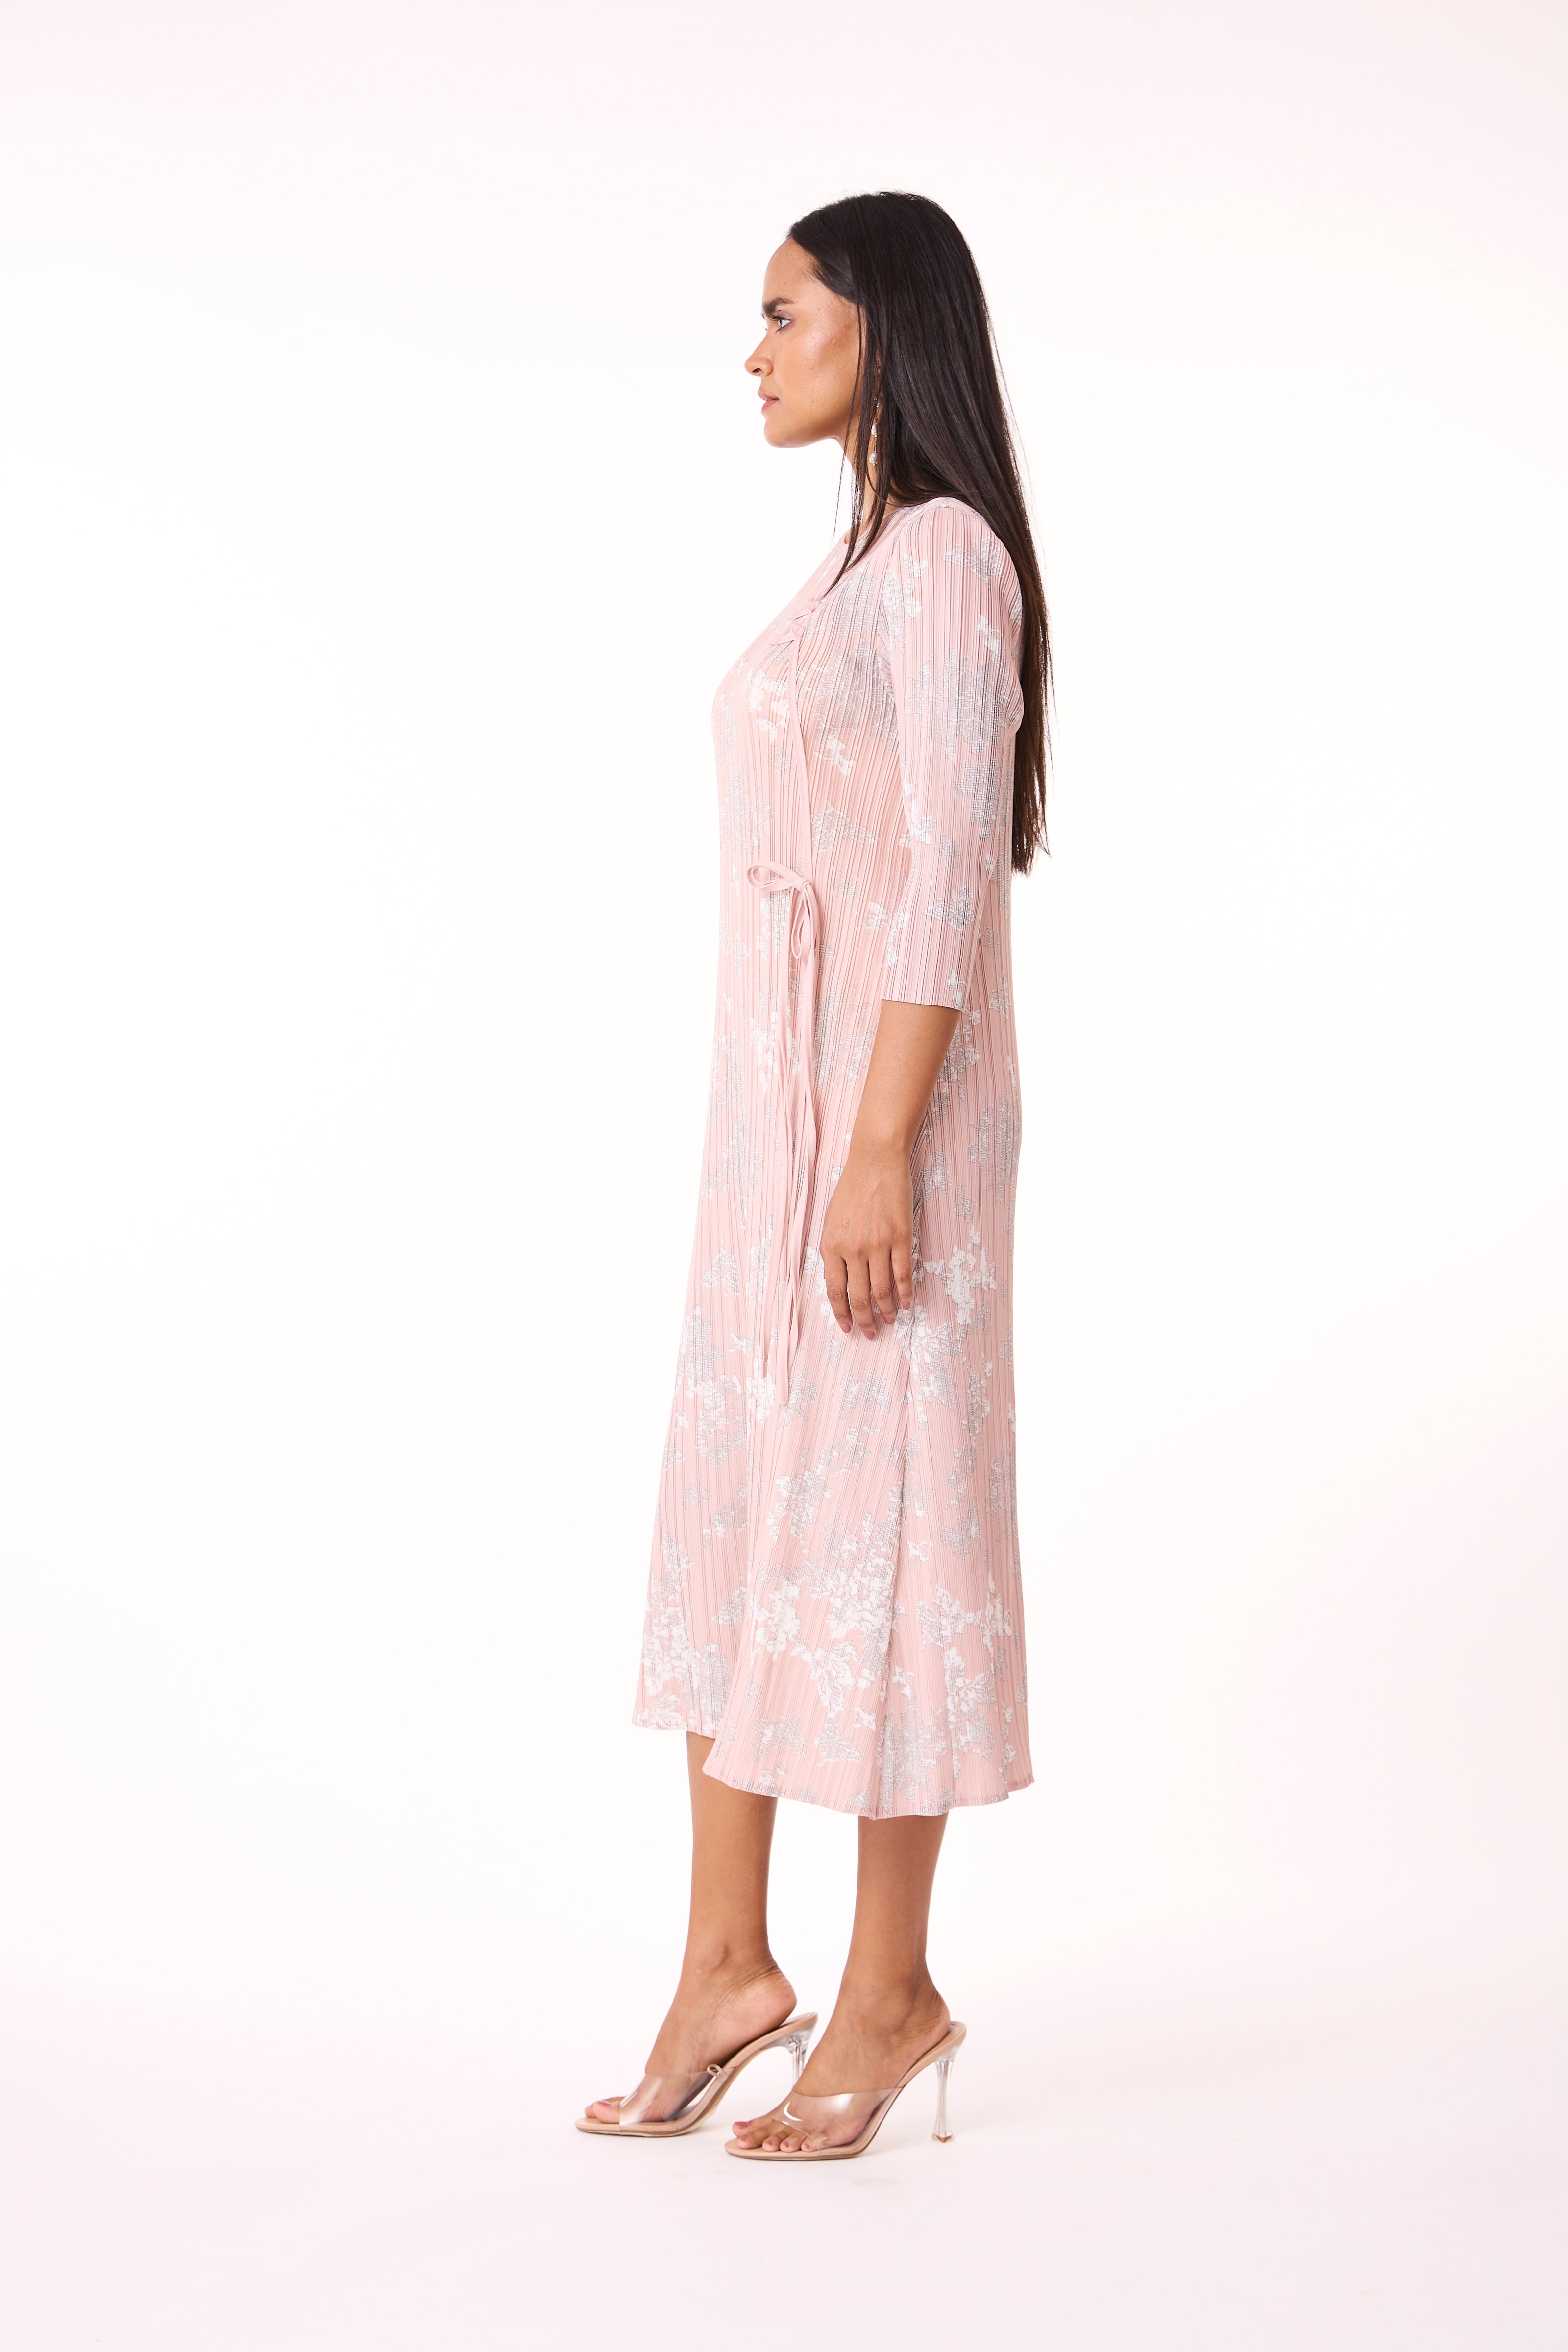 Anne Print Dress - Blush Pink